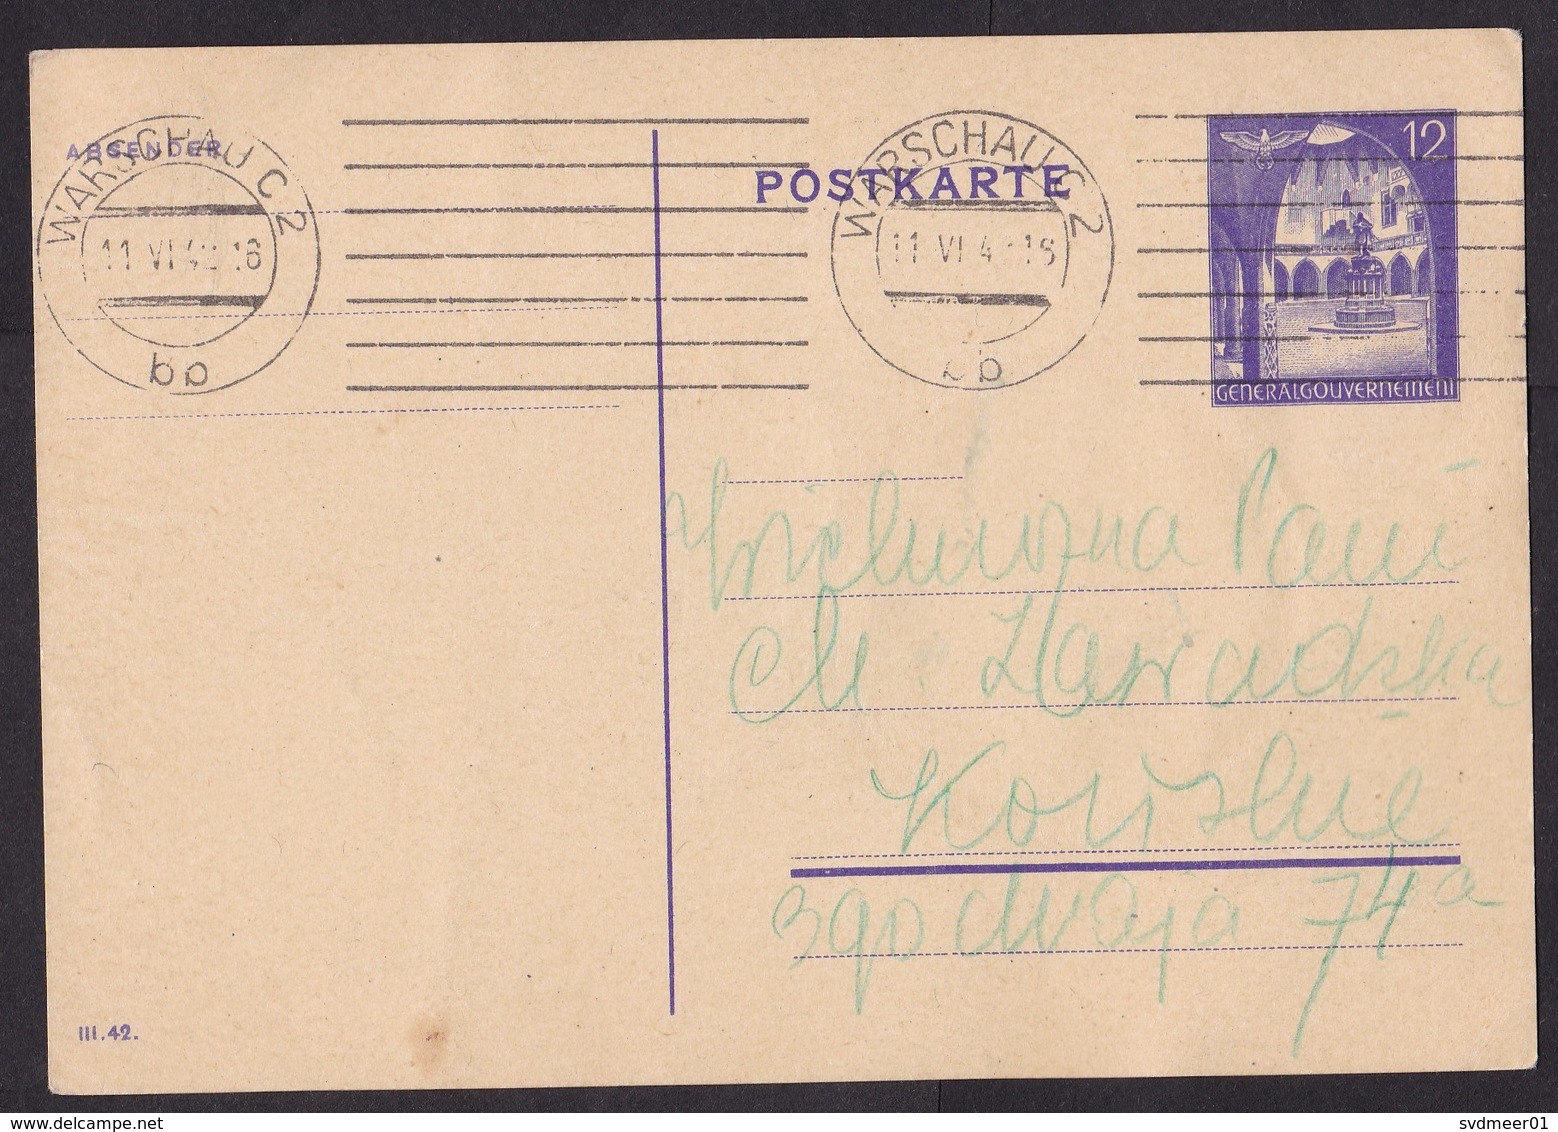 Germany / Occupied Poland / Generalgouvernement: Stationery Postcard, 1942, Cancel Warschau, War (minor Damage) - Algemene Overheid